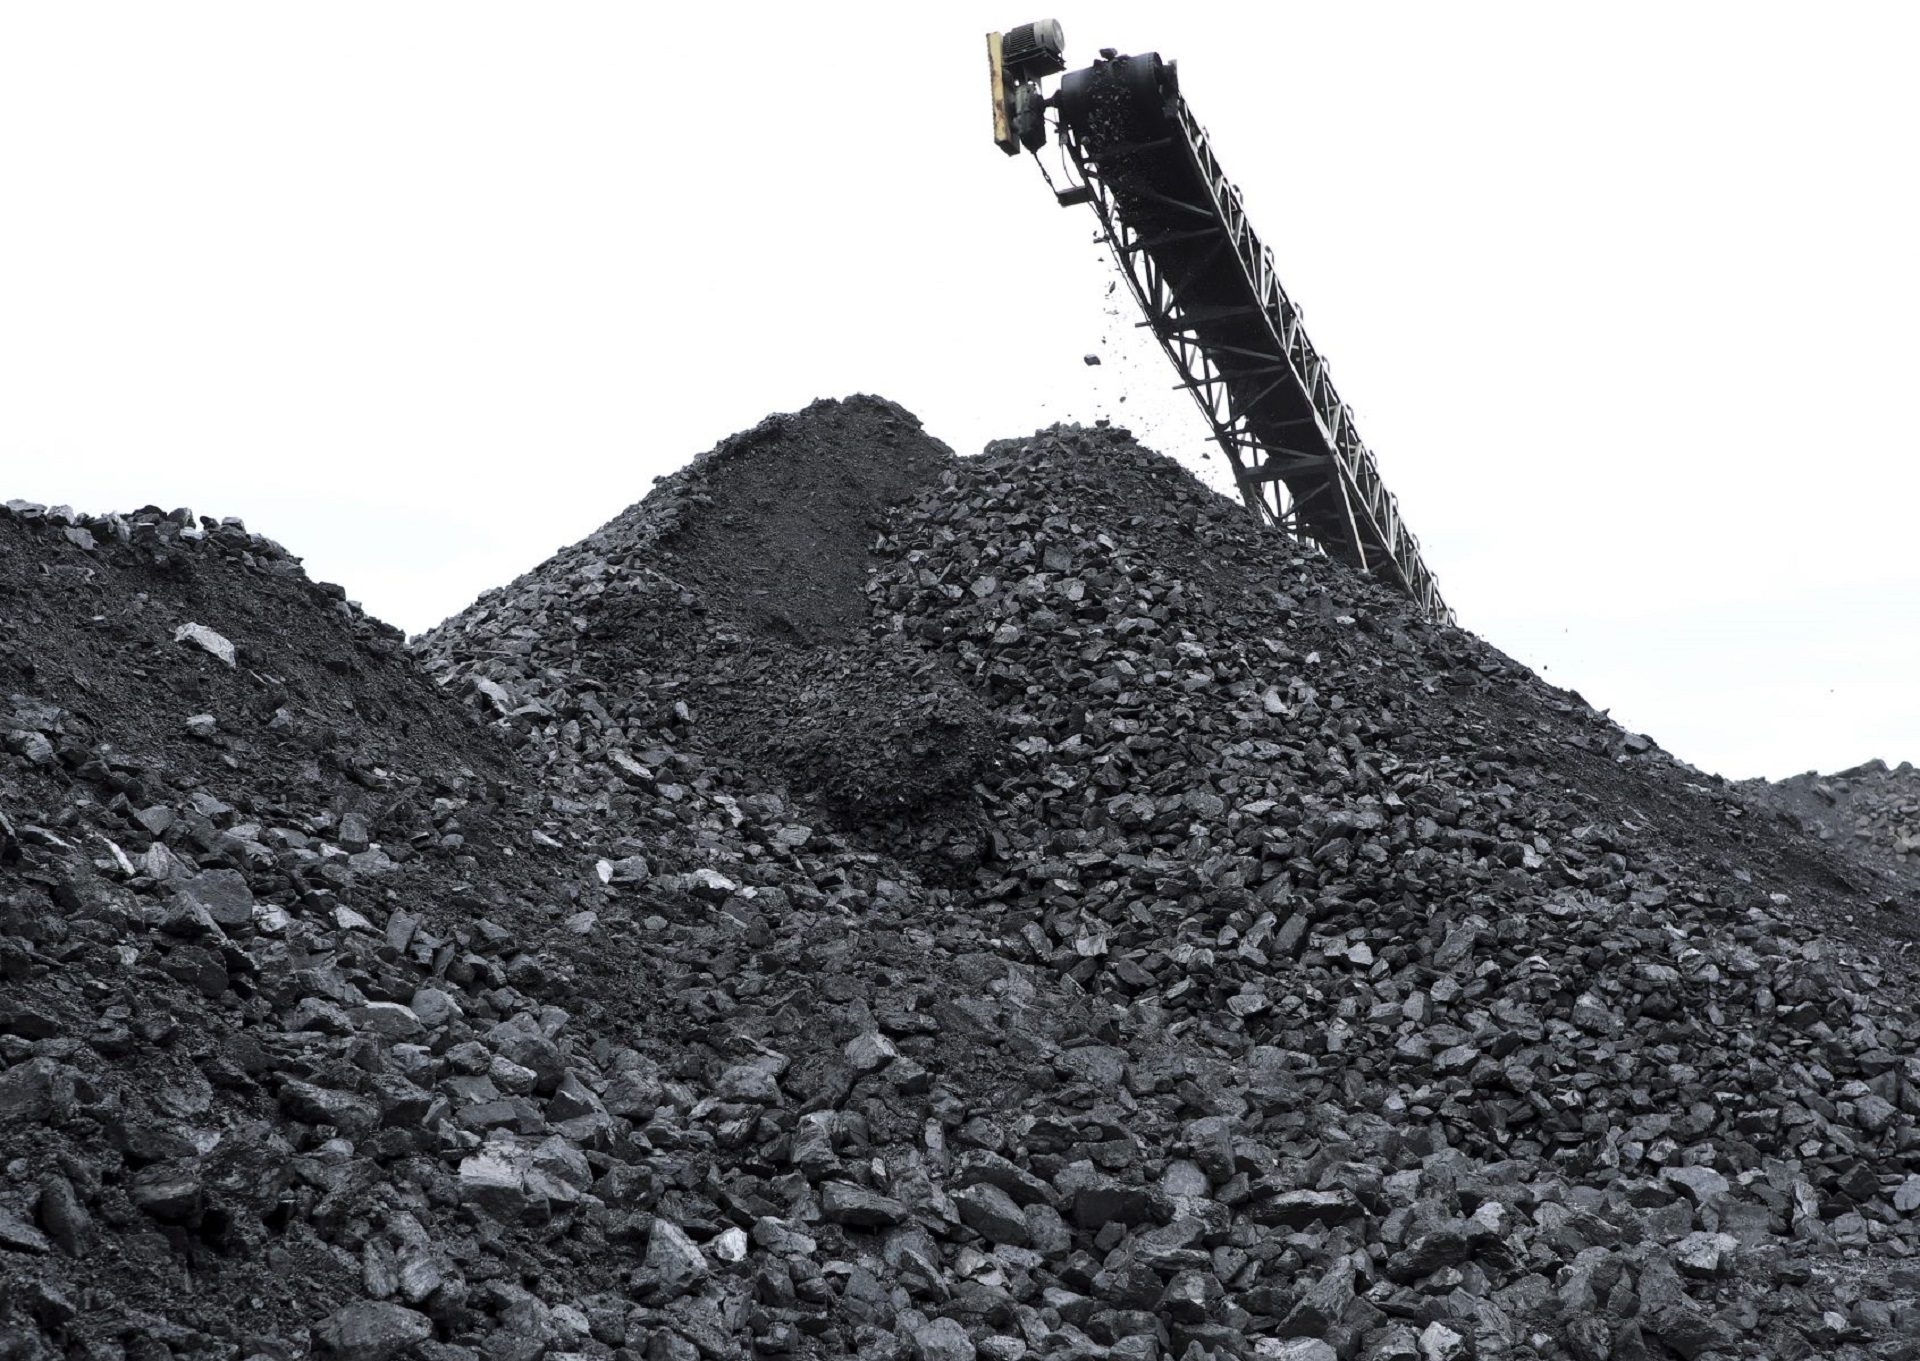 Coal is piled up at the the Blaschak Coal Corporation pit mine Dec. 4, 2018, in Mount Carmel, Pennsylvania.

Matt Smith / Keystone Crossroads